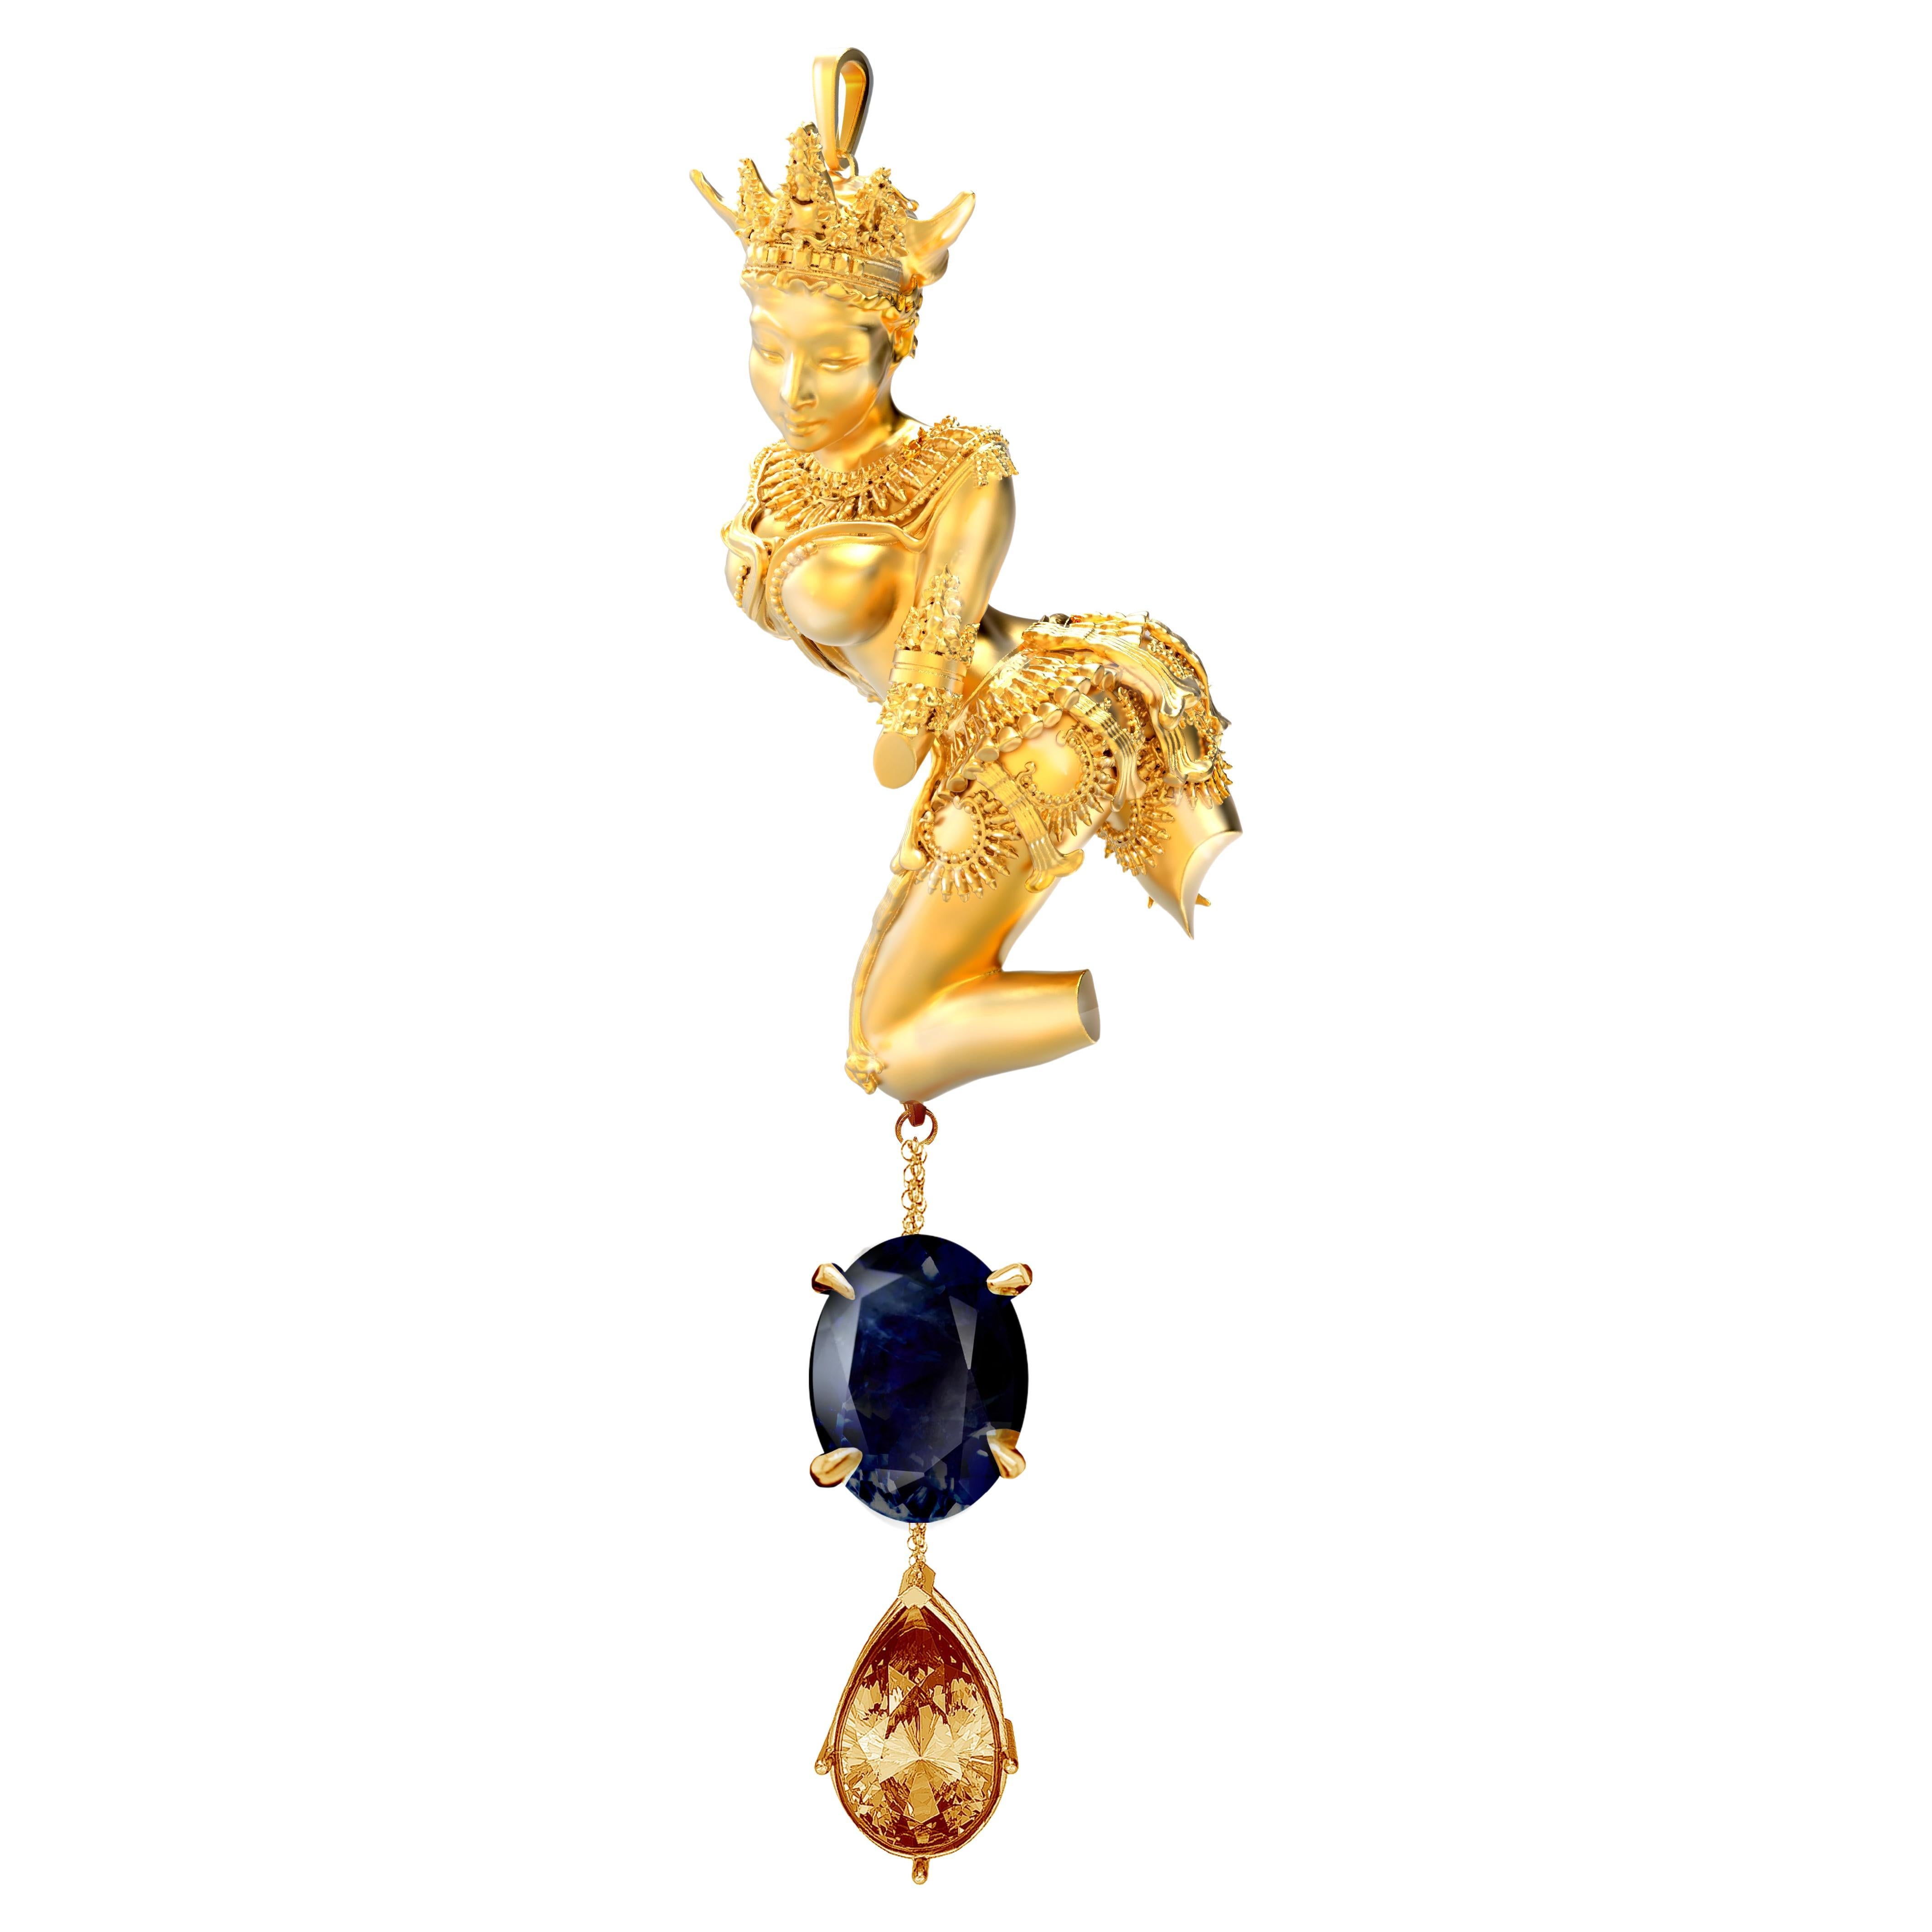 Eighteen Karat Yellow Gold Pendant Necklace with Dark Blue Sapphire and Citrine